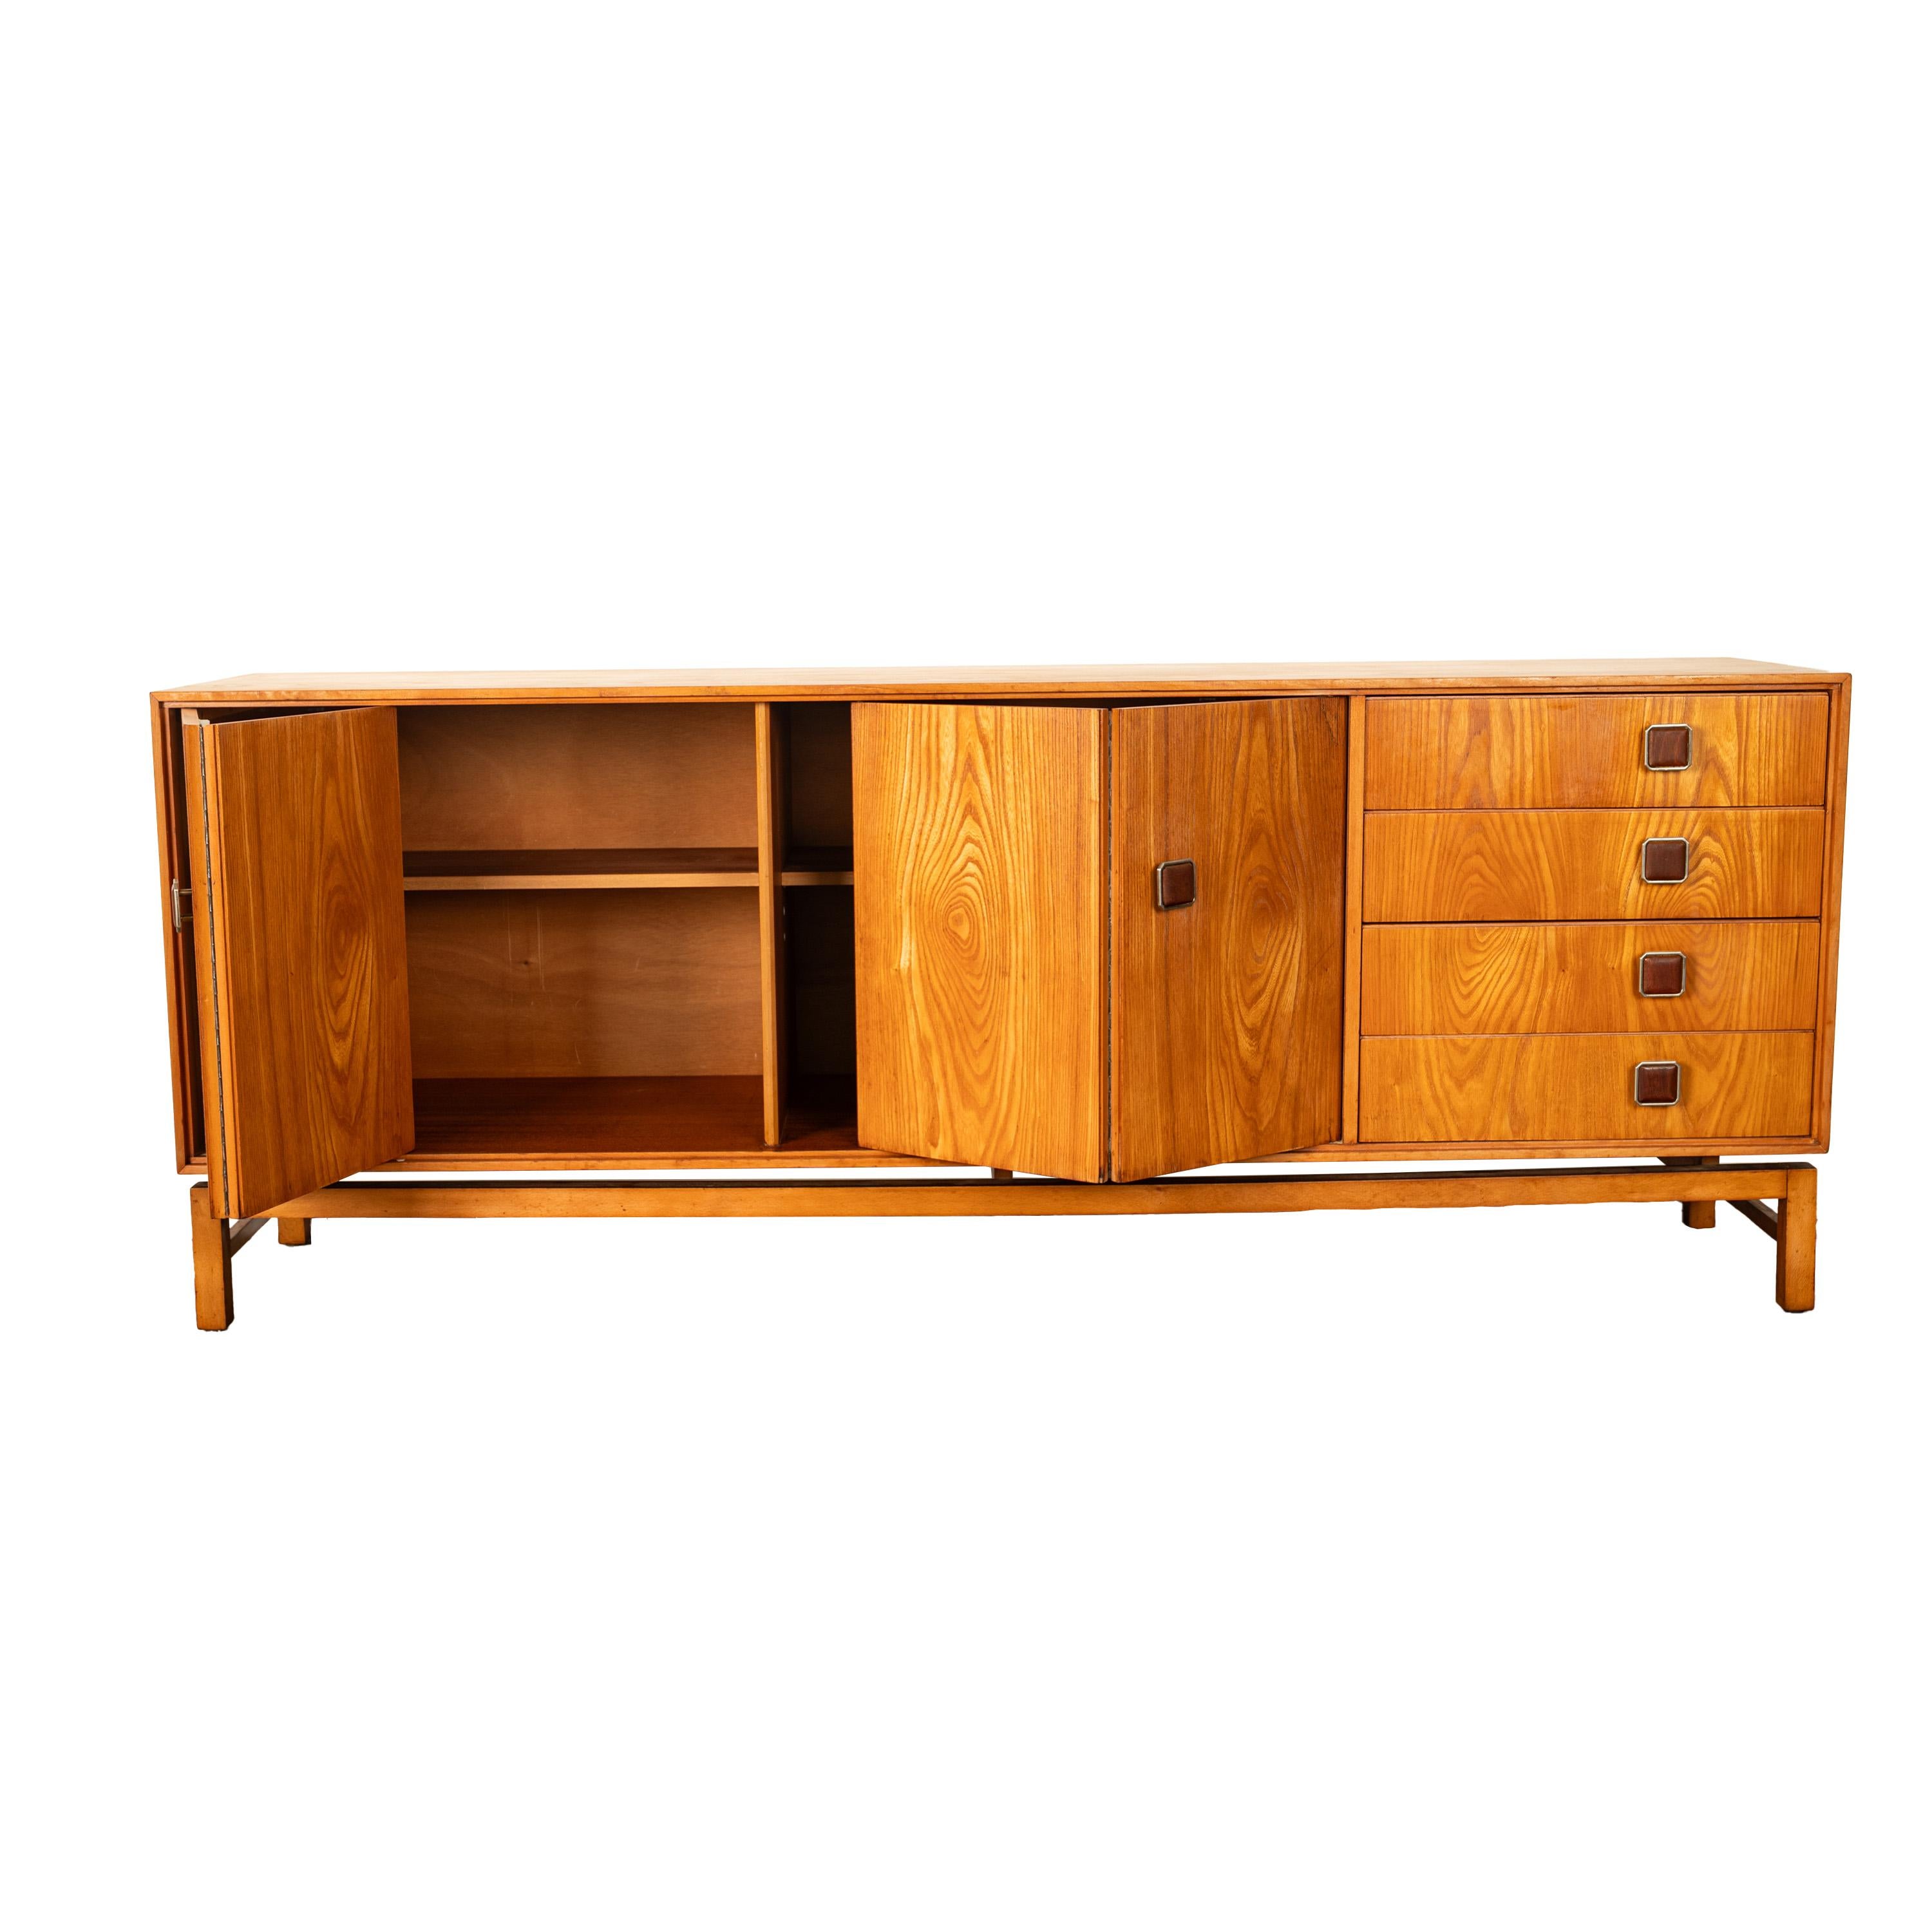 20th Century Original Danish Mid Century Modern Teak Credenza Sideboard Cabinet 6' Long 1960 